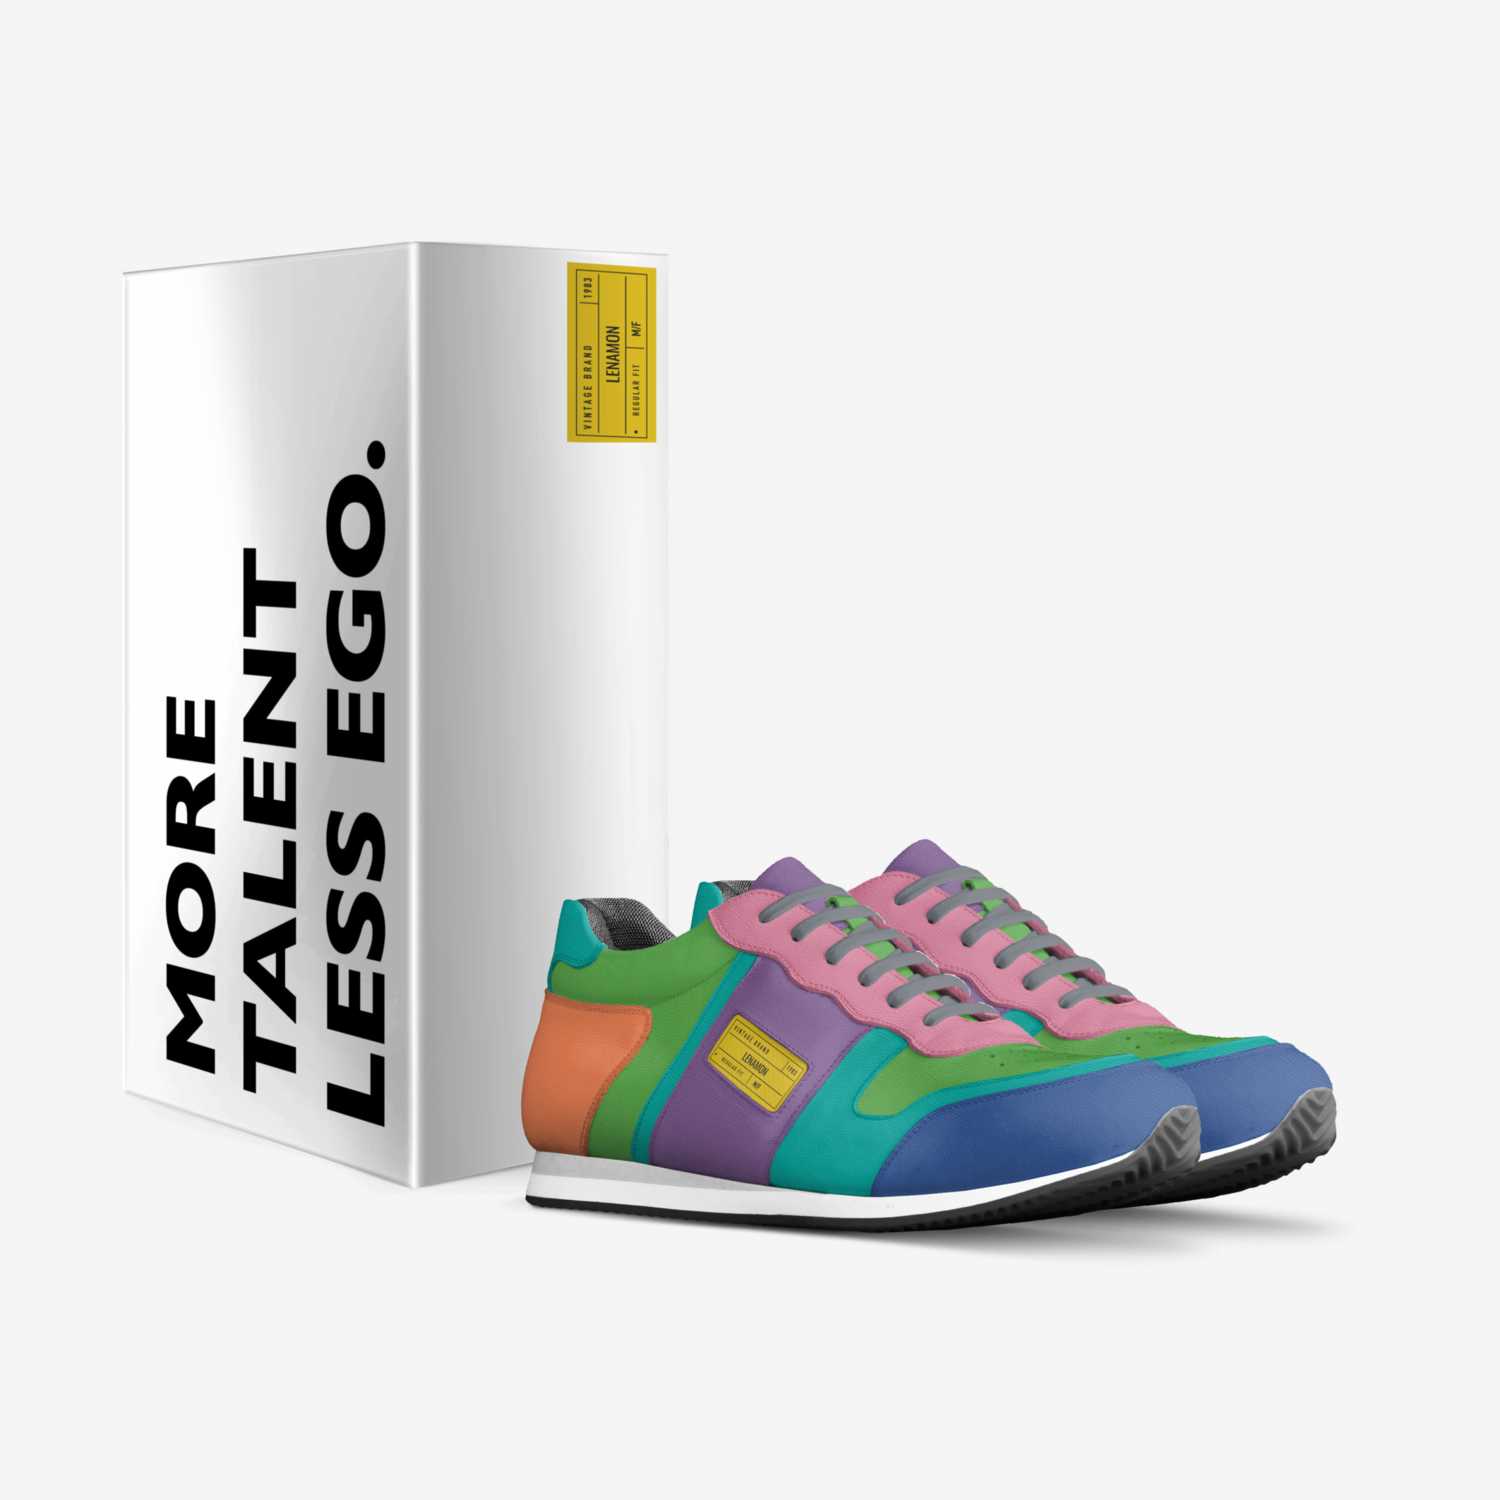 LenaMon custom made in Italy shoes by Ashante Timoll | Box view